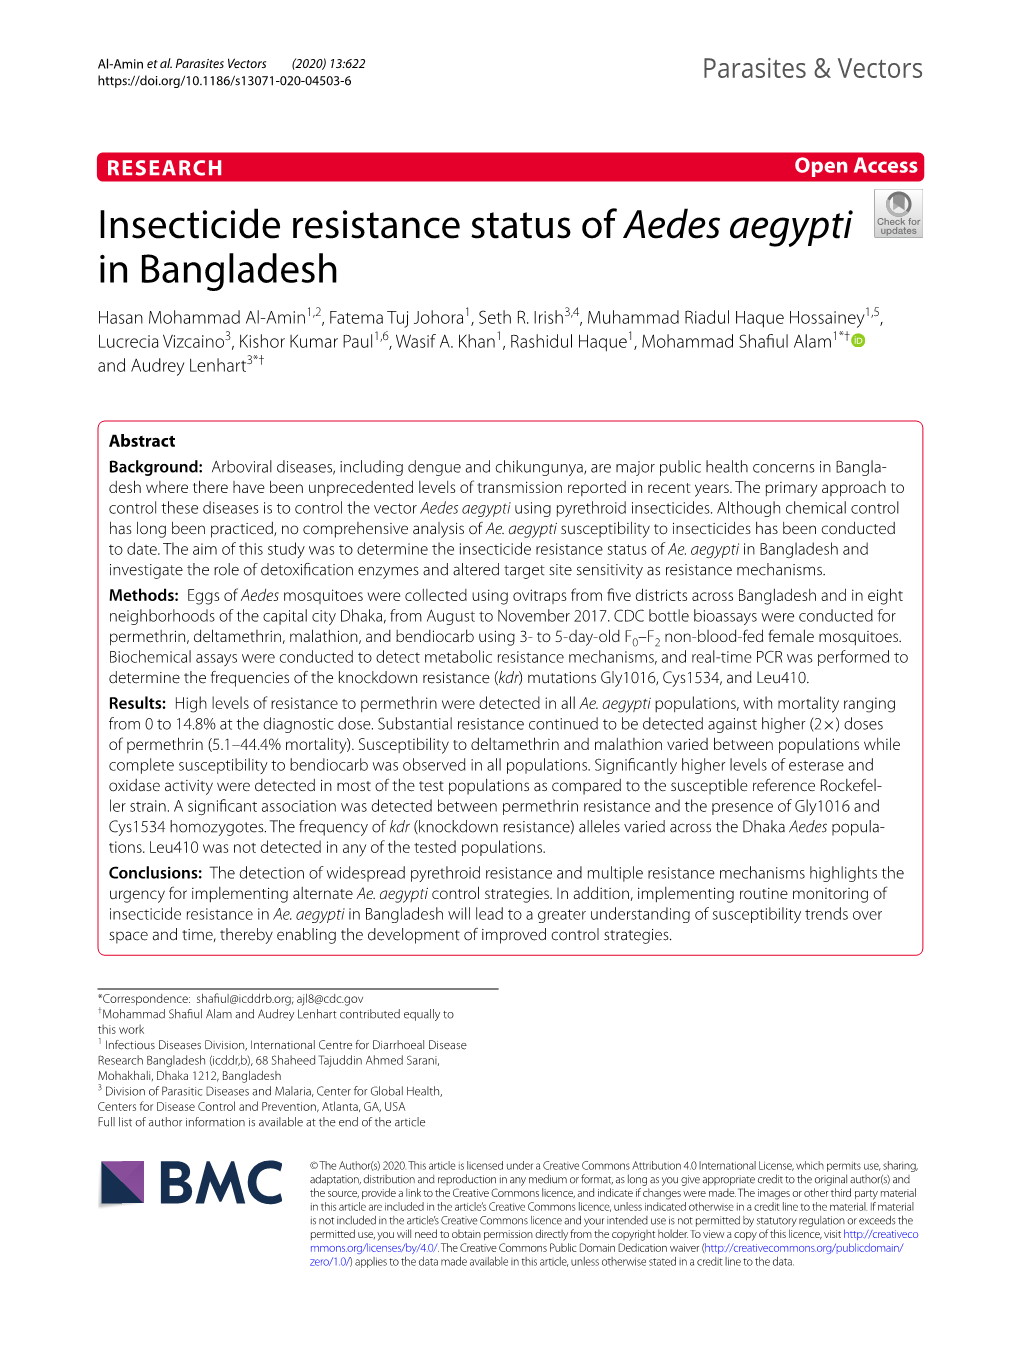 Insecticide Resistance Status of Aedes Aegypti in Bangladesh Hasan Mohammad Al‑Amin1,2, Fatema Tuj Johora1, Seth R